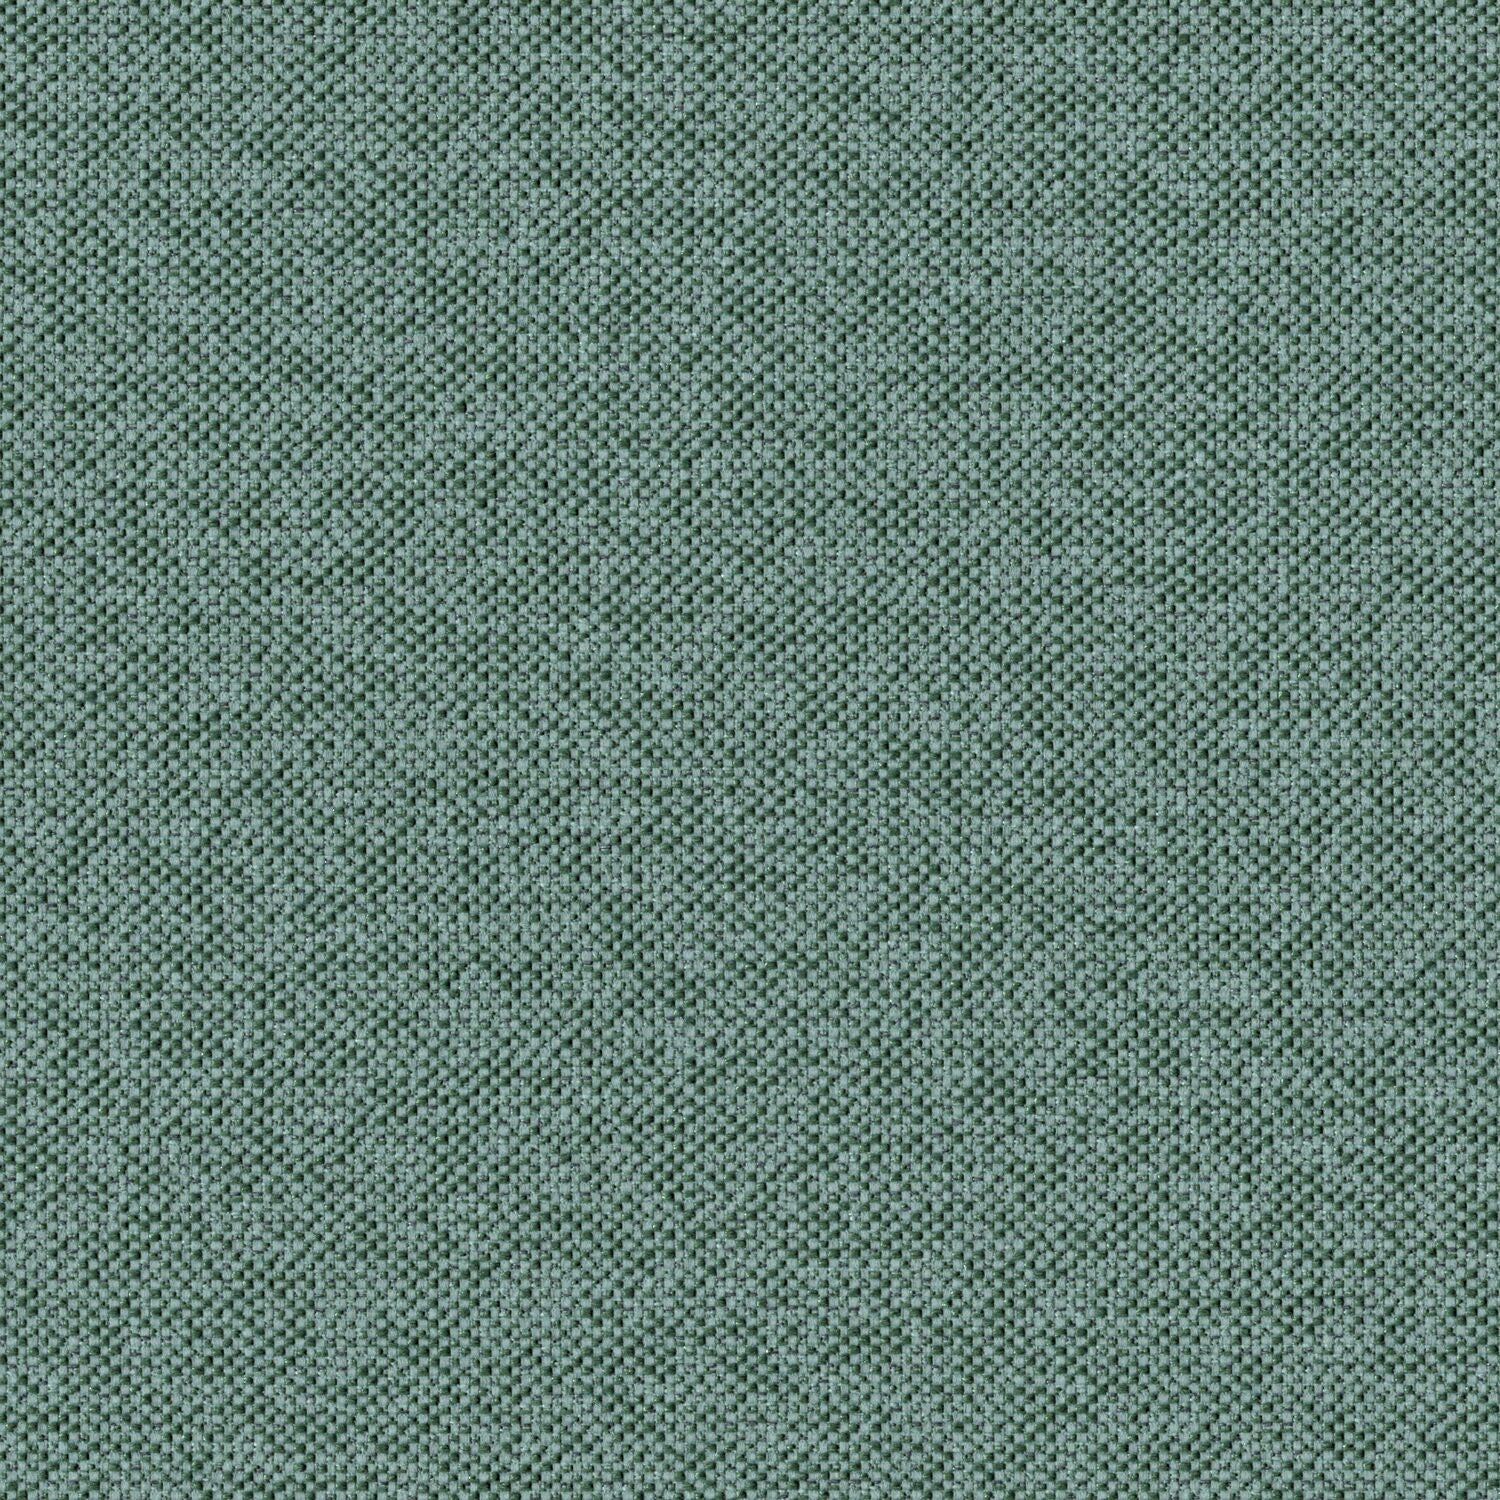 Texture Map - Green Algae - 2004 - 13